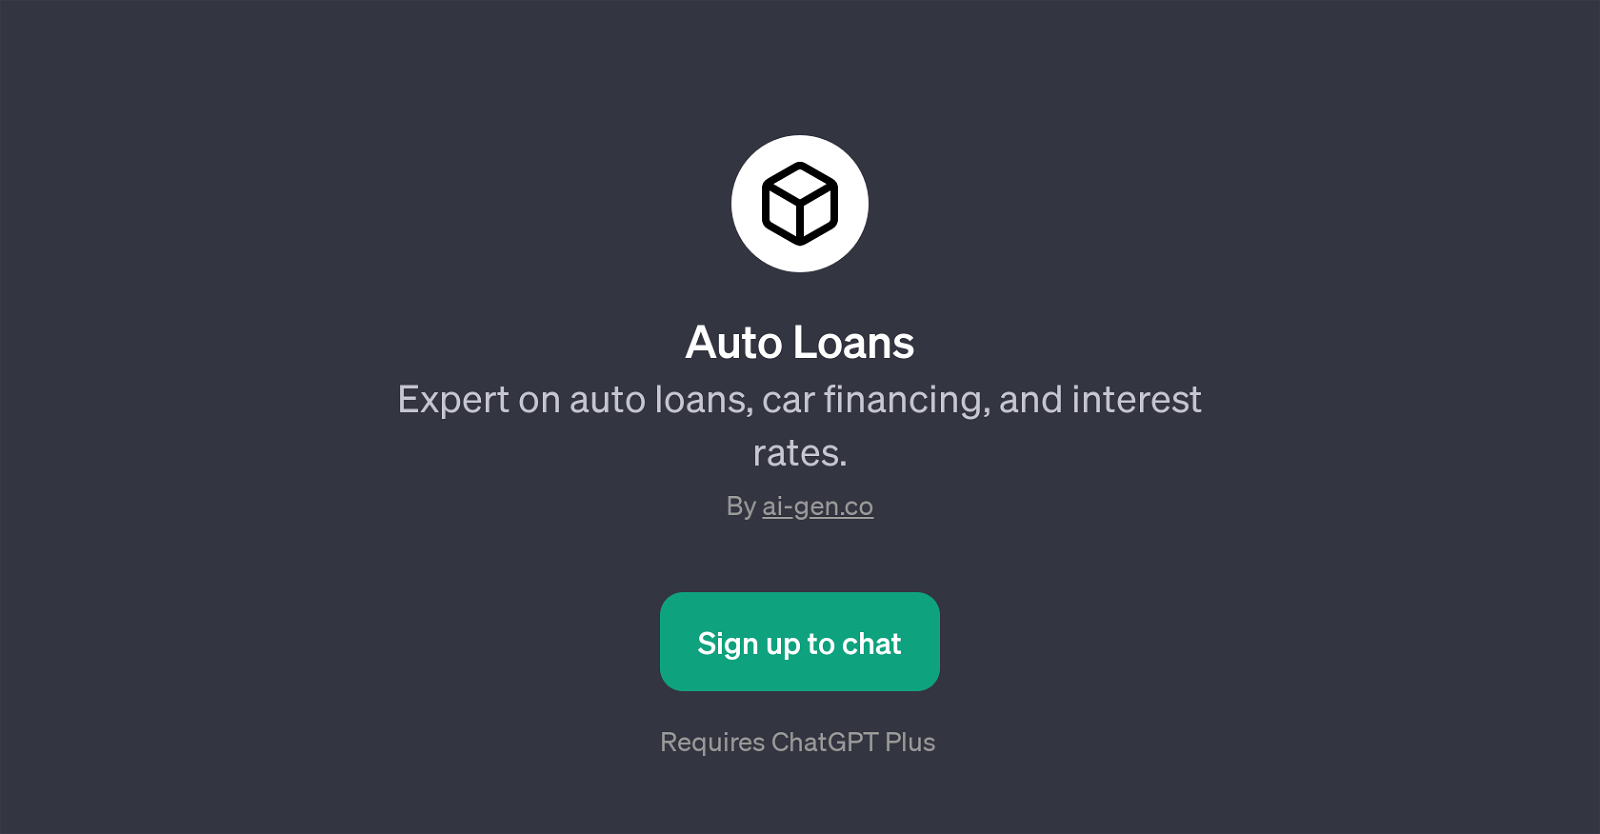 Auto Loans website